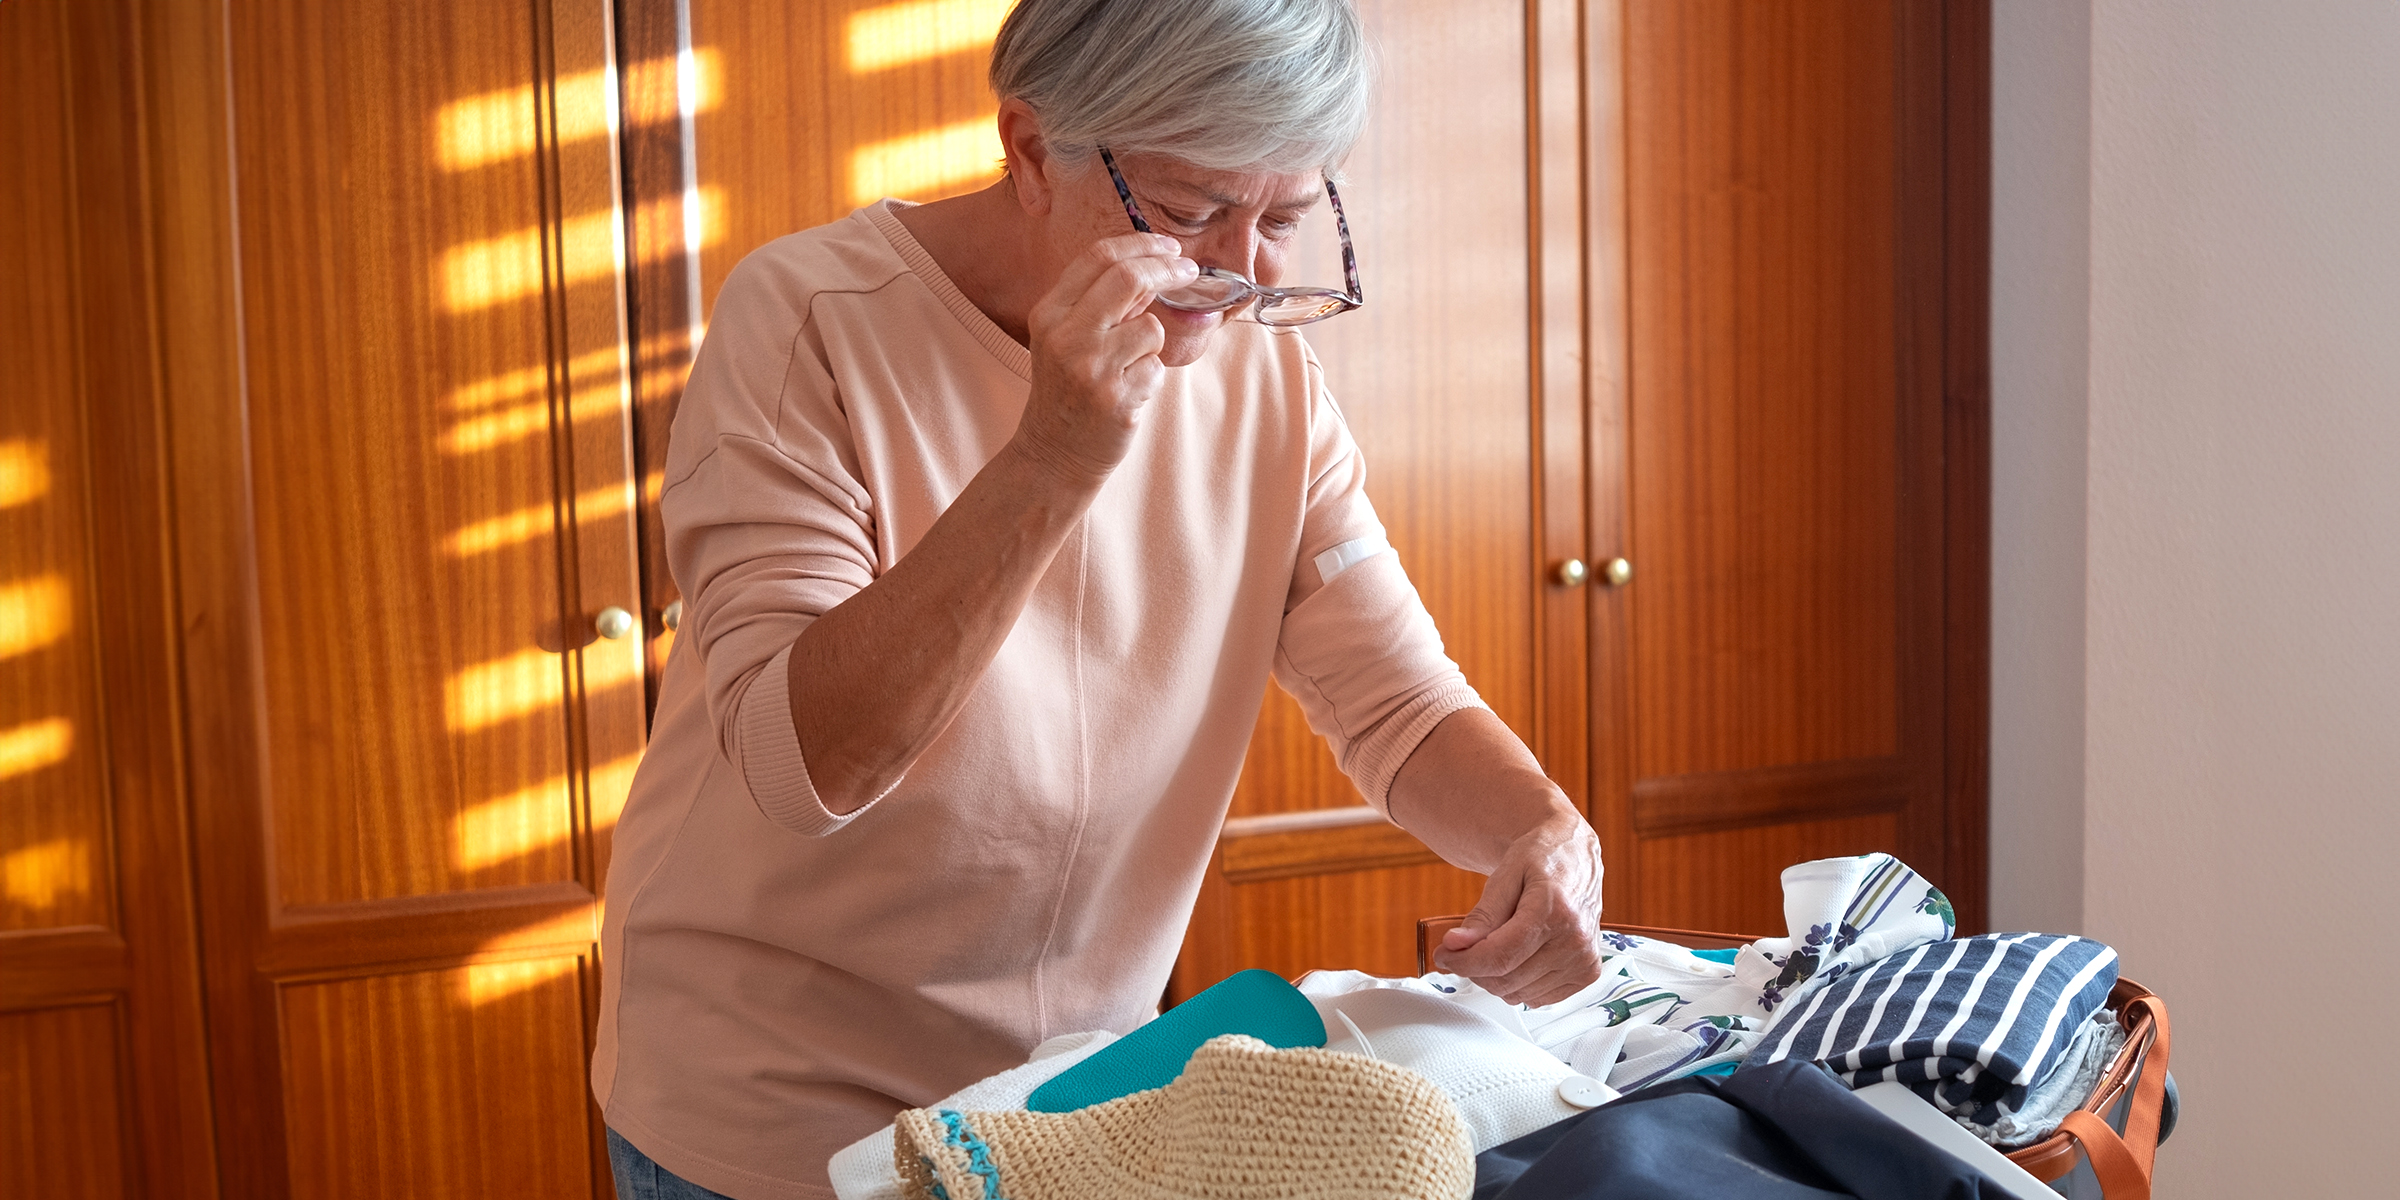 An older woman assembling old clothes | Source: Shutterstock